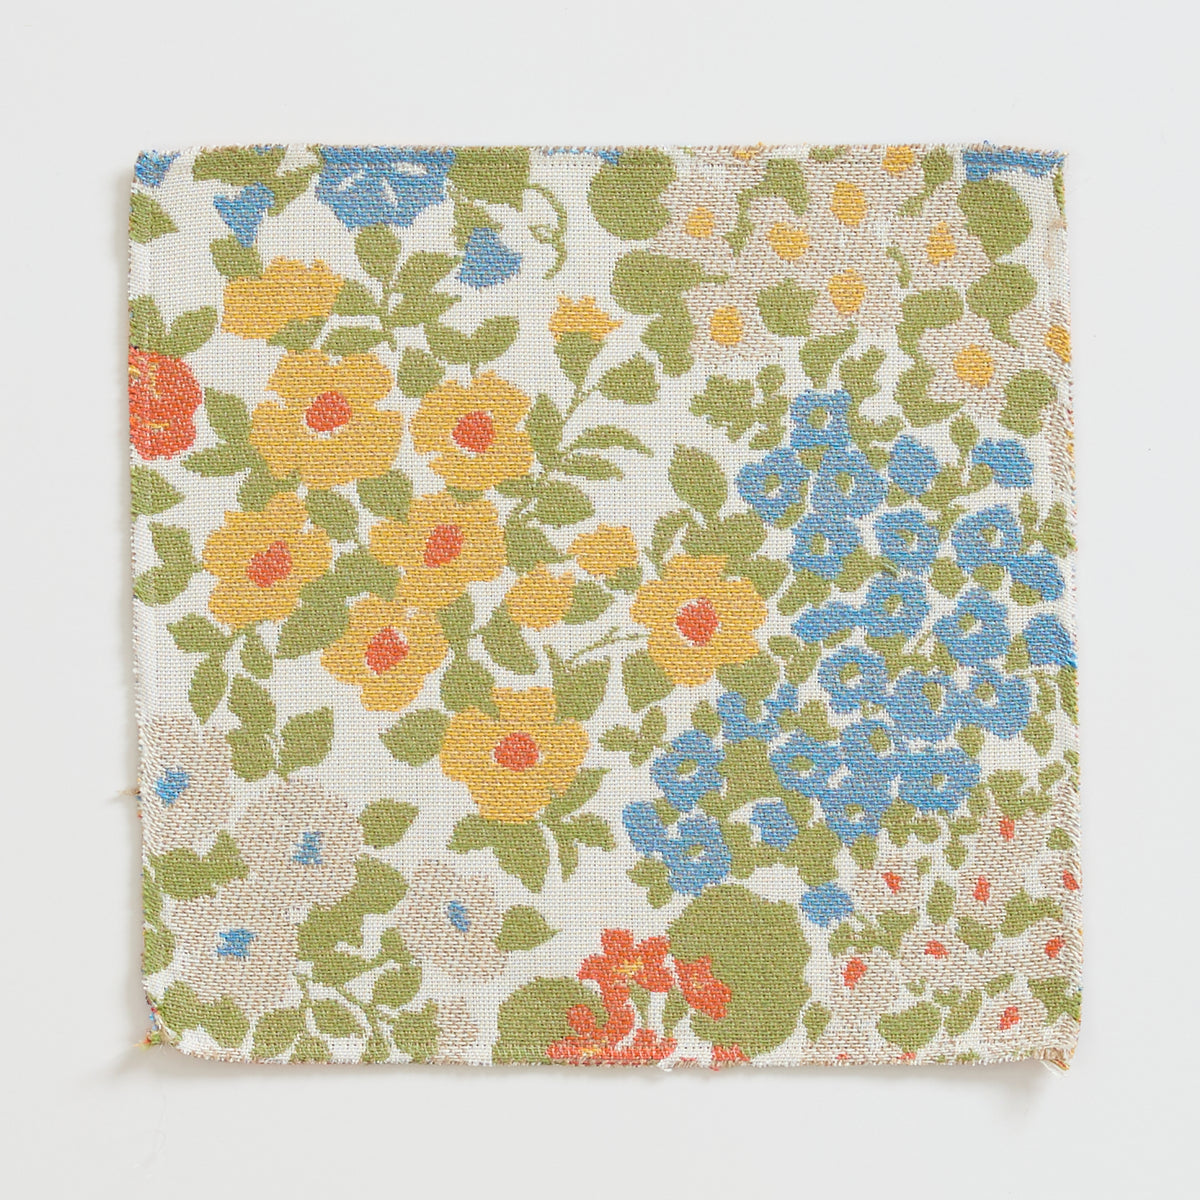 Million Flowers Indoor/Outdoor Fabric by Sunbrella®